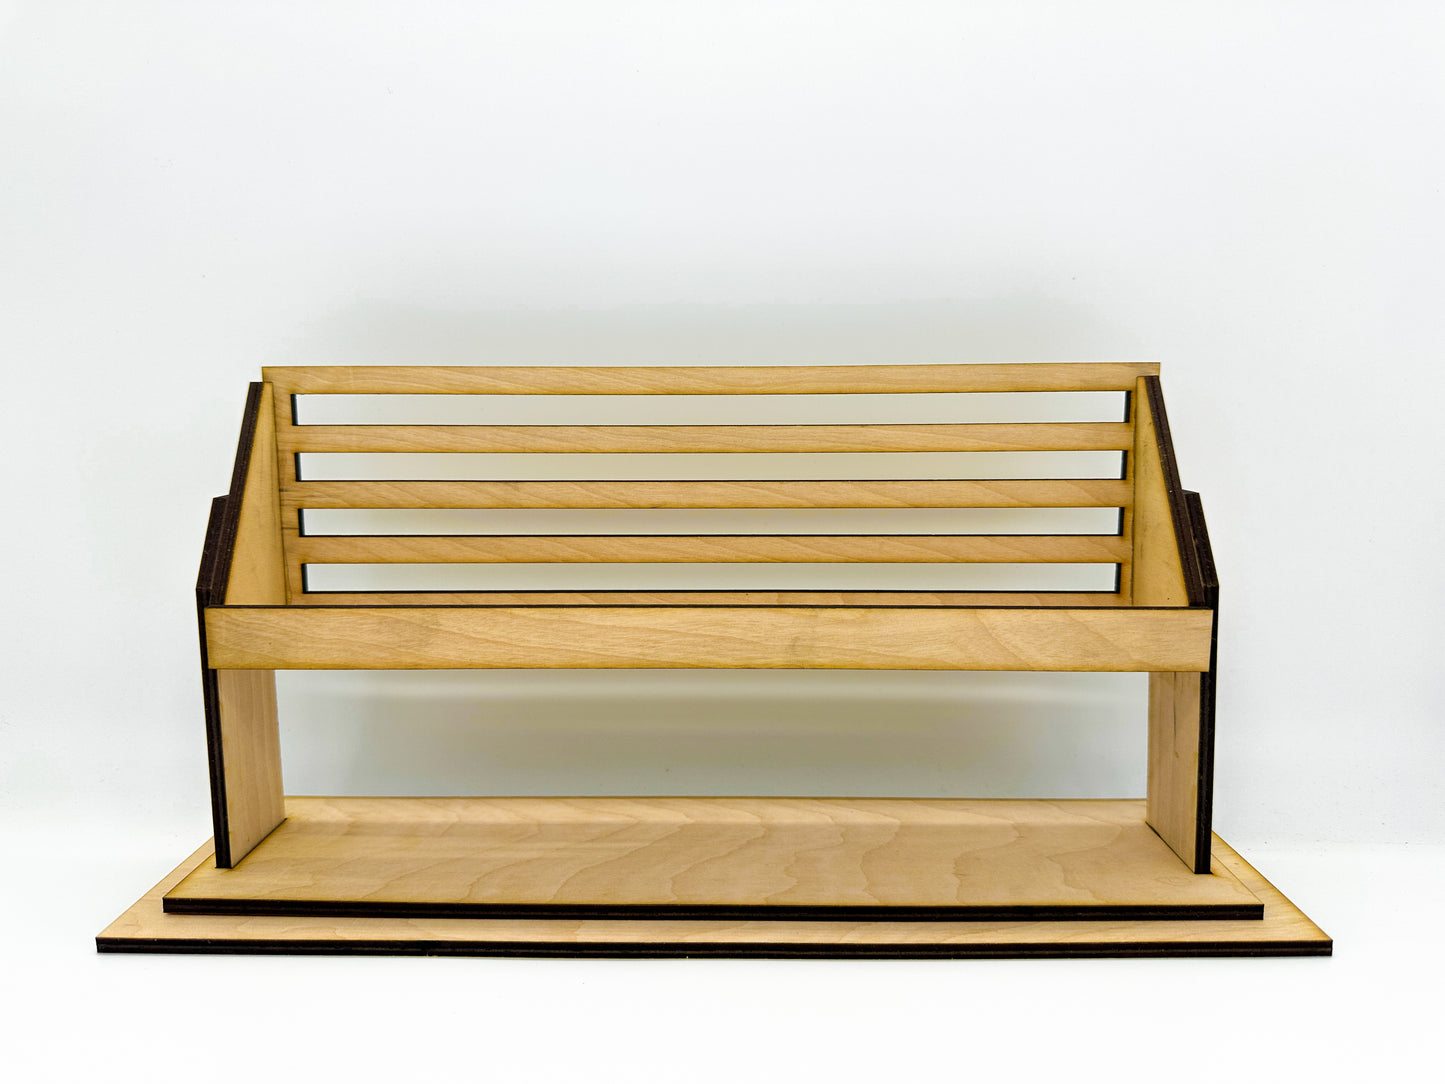 Bench Shelf Sitter Base Riser DIY Kit | Unfinished Paint Your Own